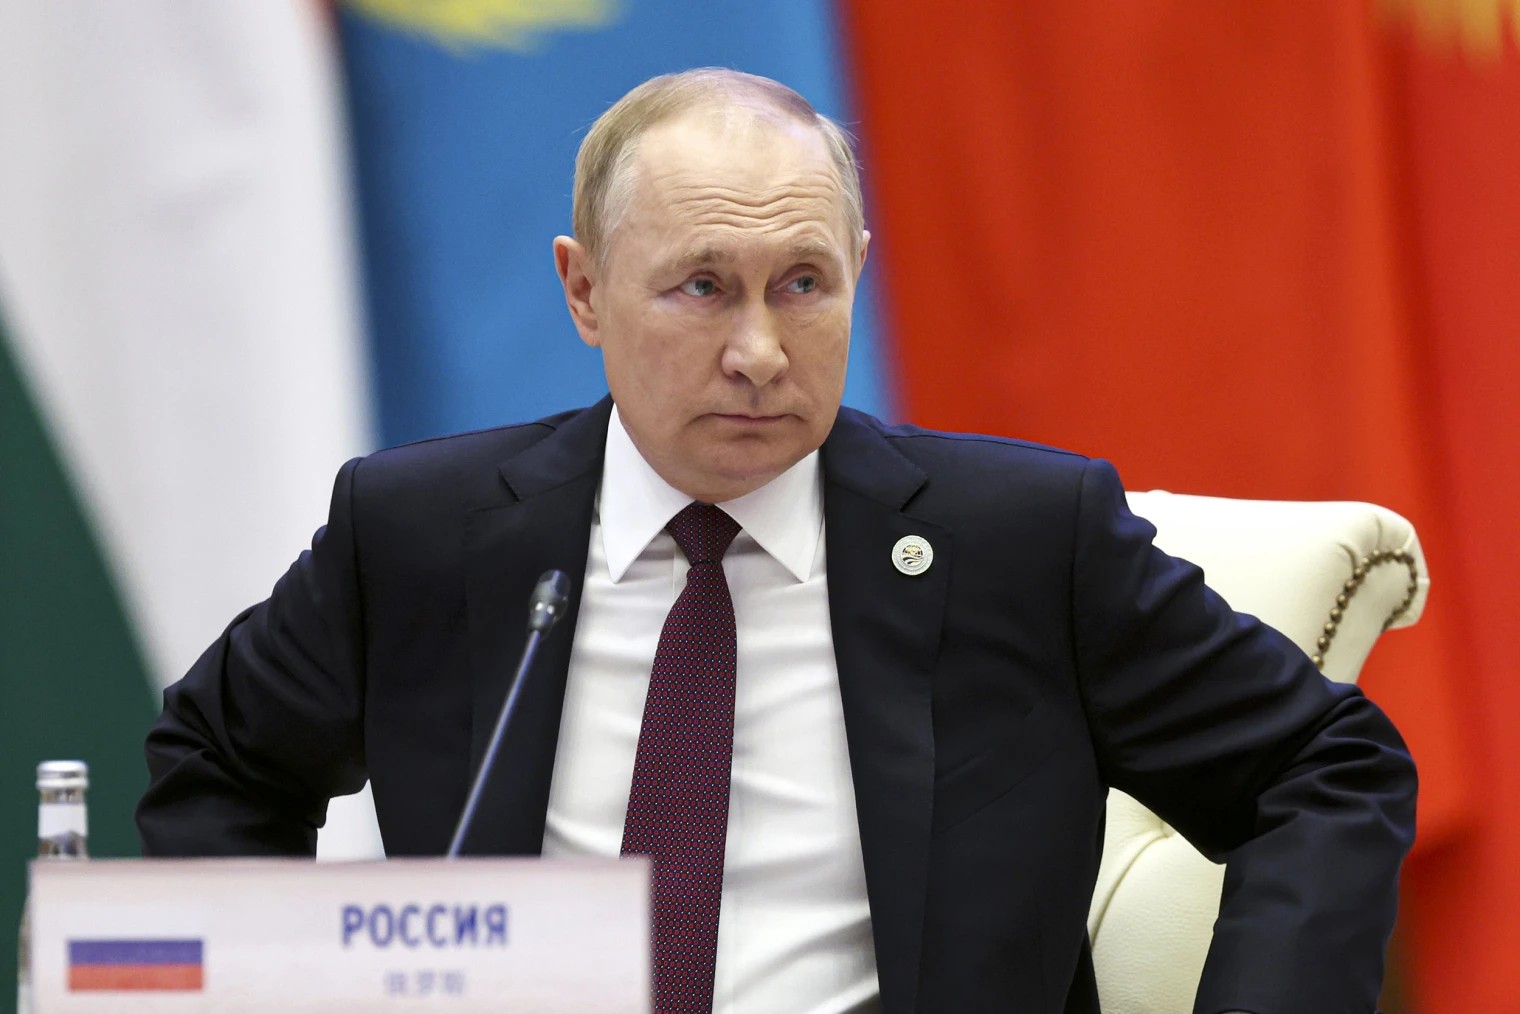 Pengadilan Internasional Perintahkan Tangkap Presiden Putin, Kini Jadi Buronan